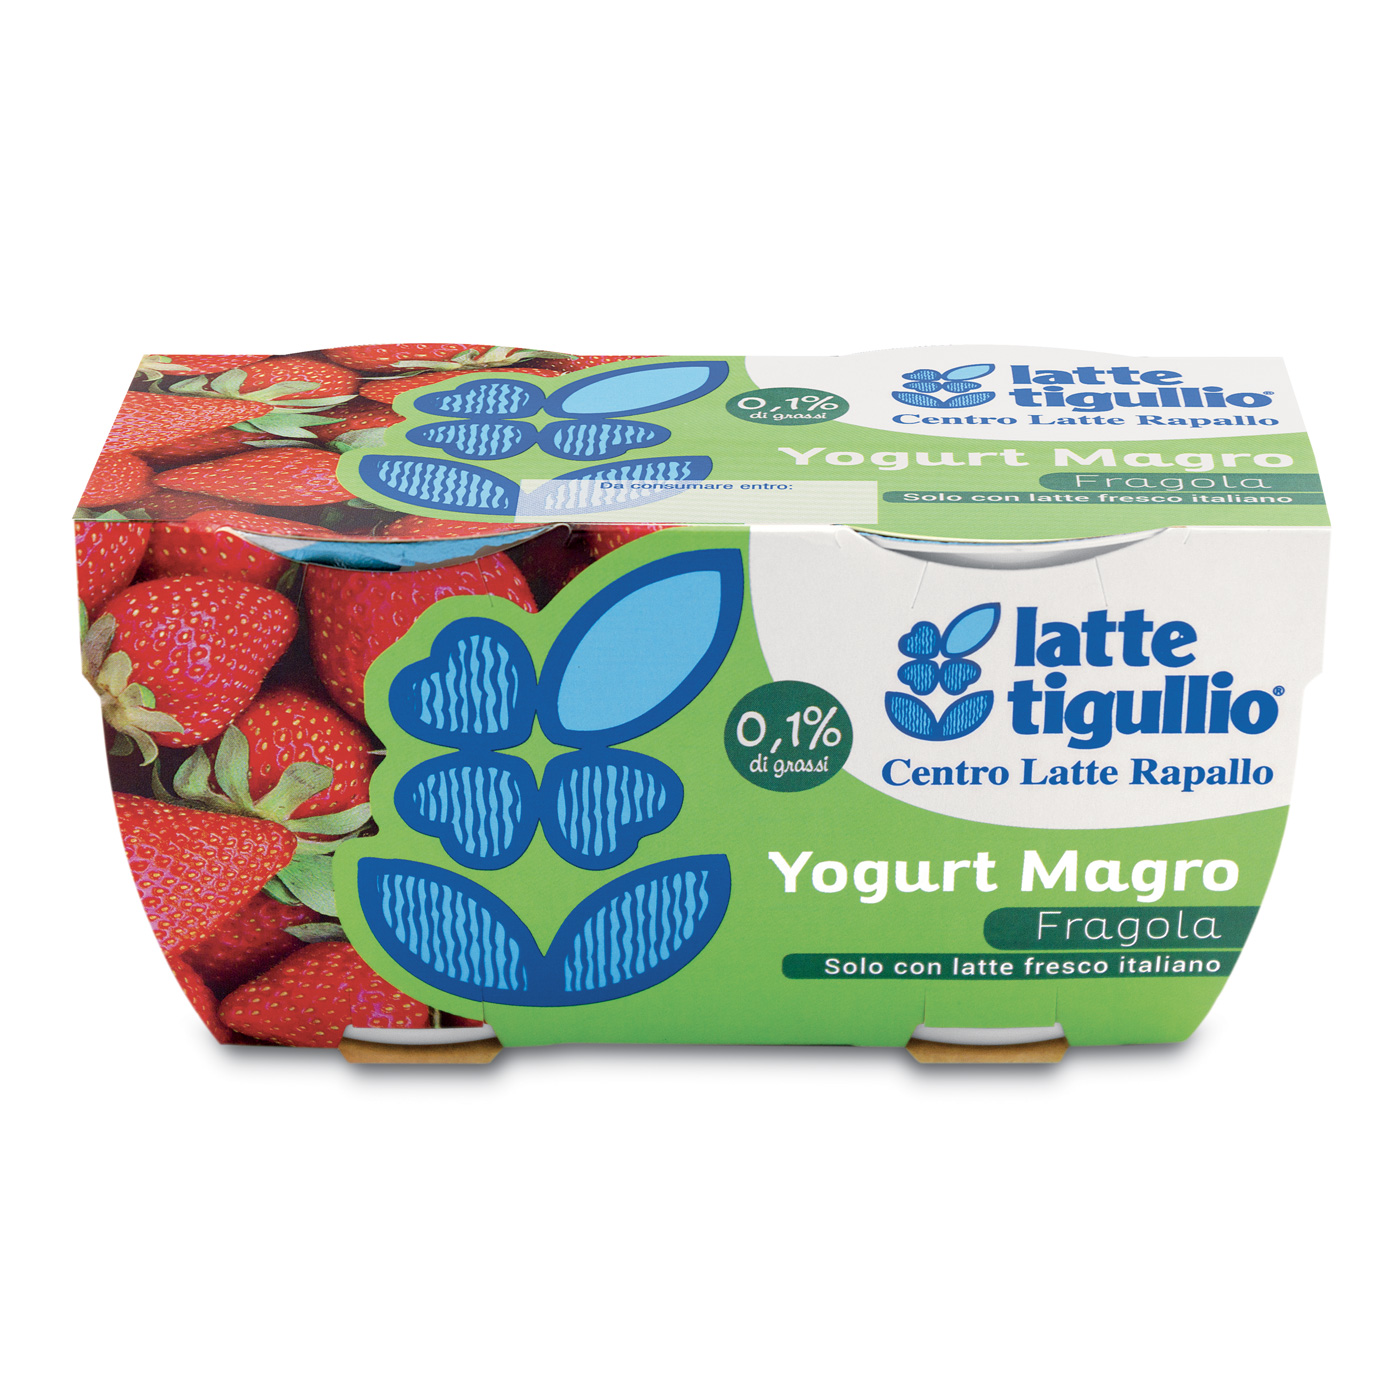 Yogurt Magro Fragola - Latte Tigullio